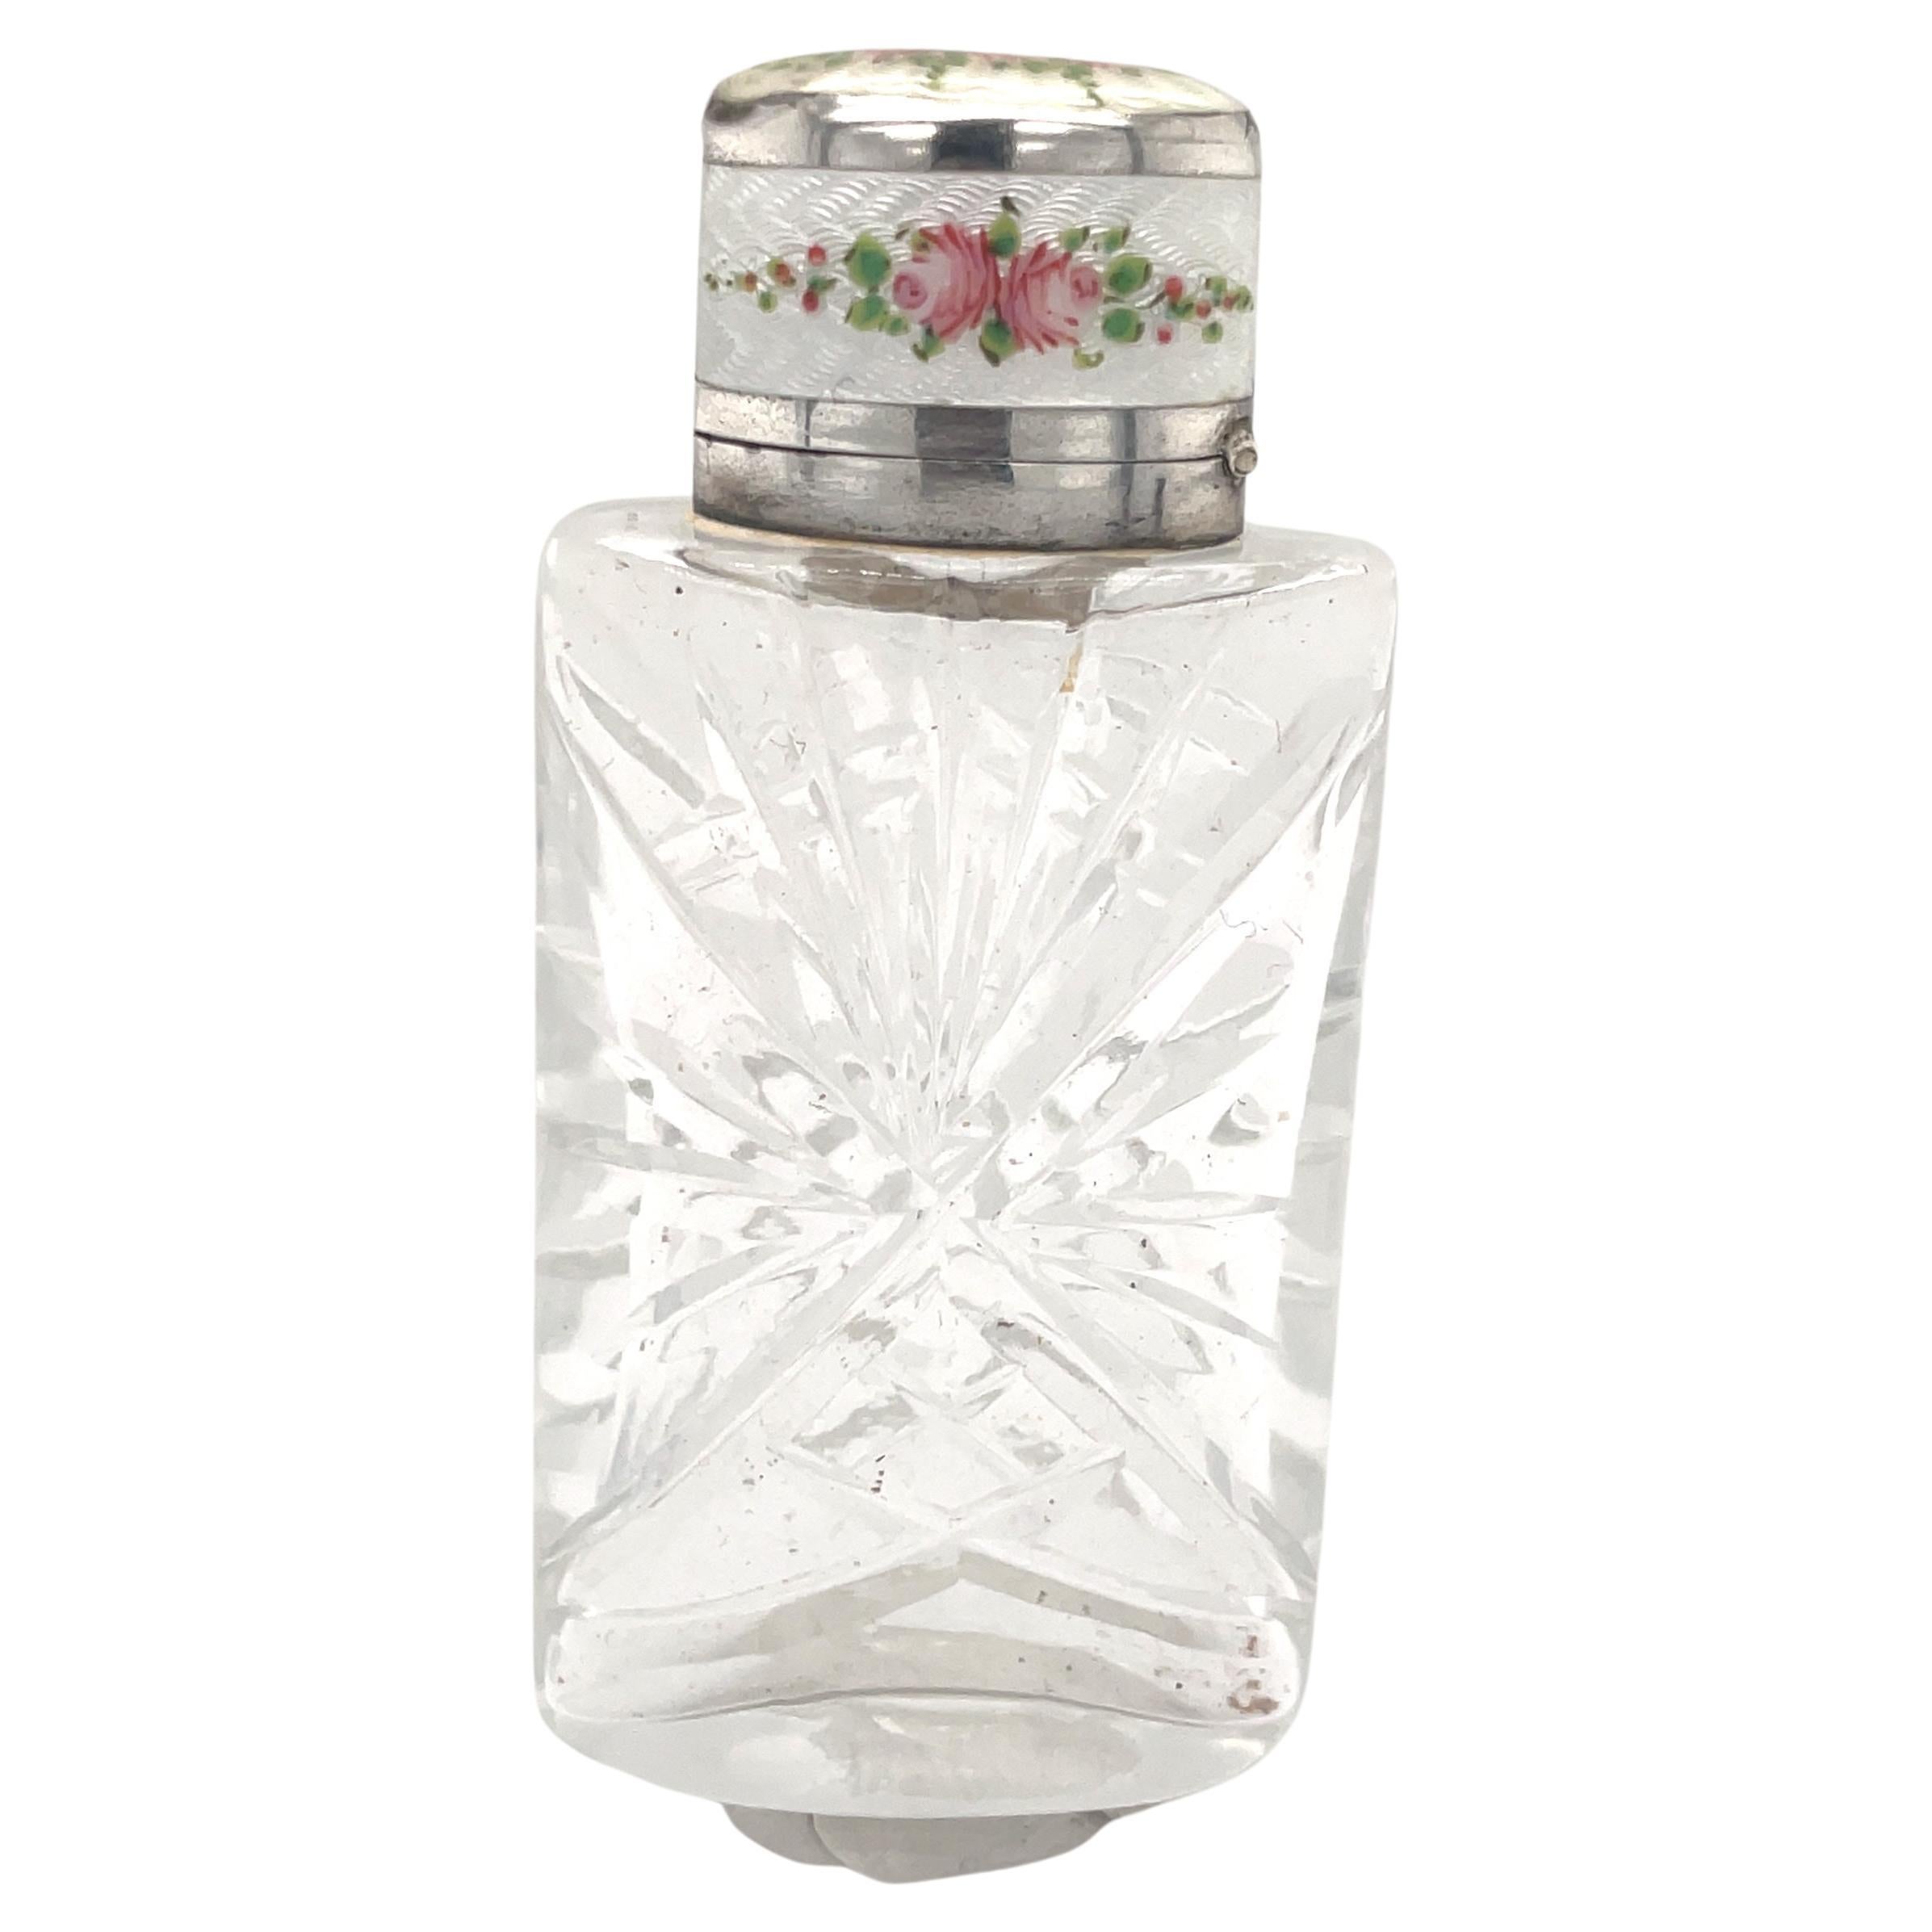 Antique Glass and Enamel Perfume Bottle 